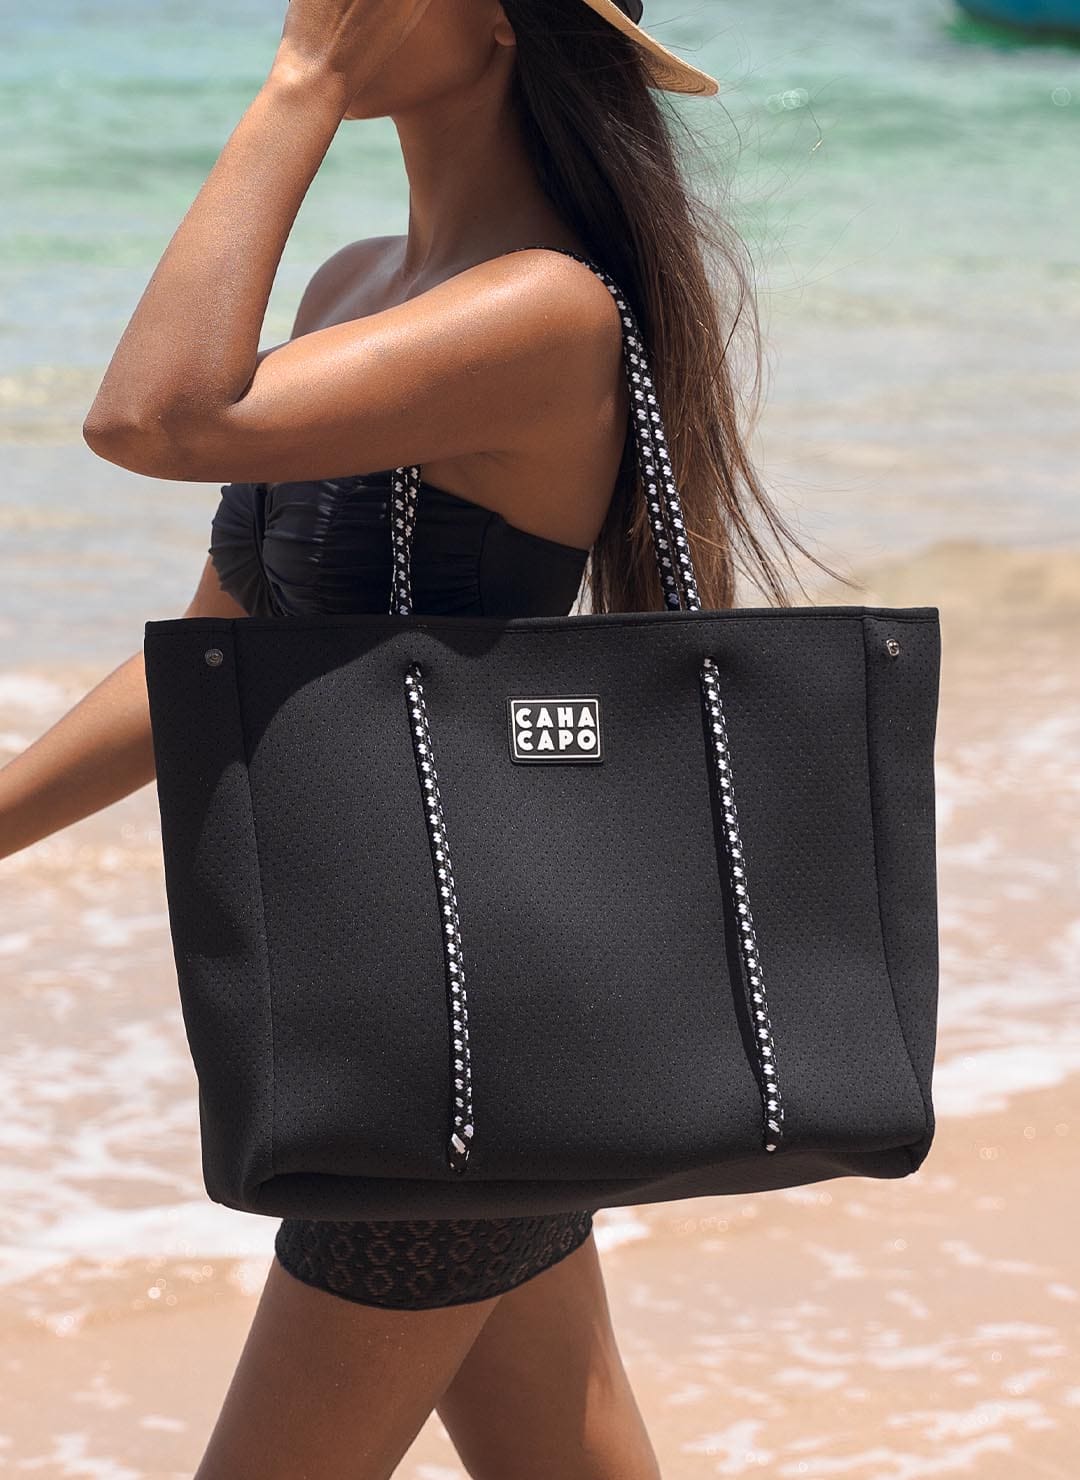 Beach Tote or Bags | accessories | Caha Capo